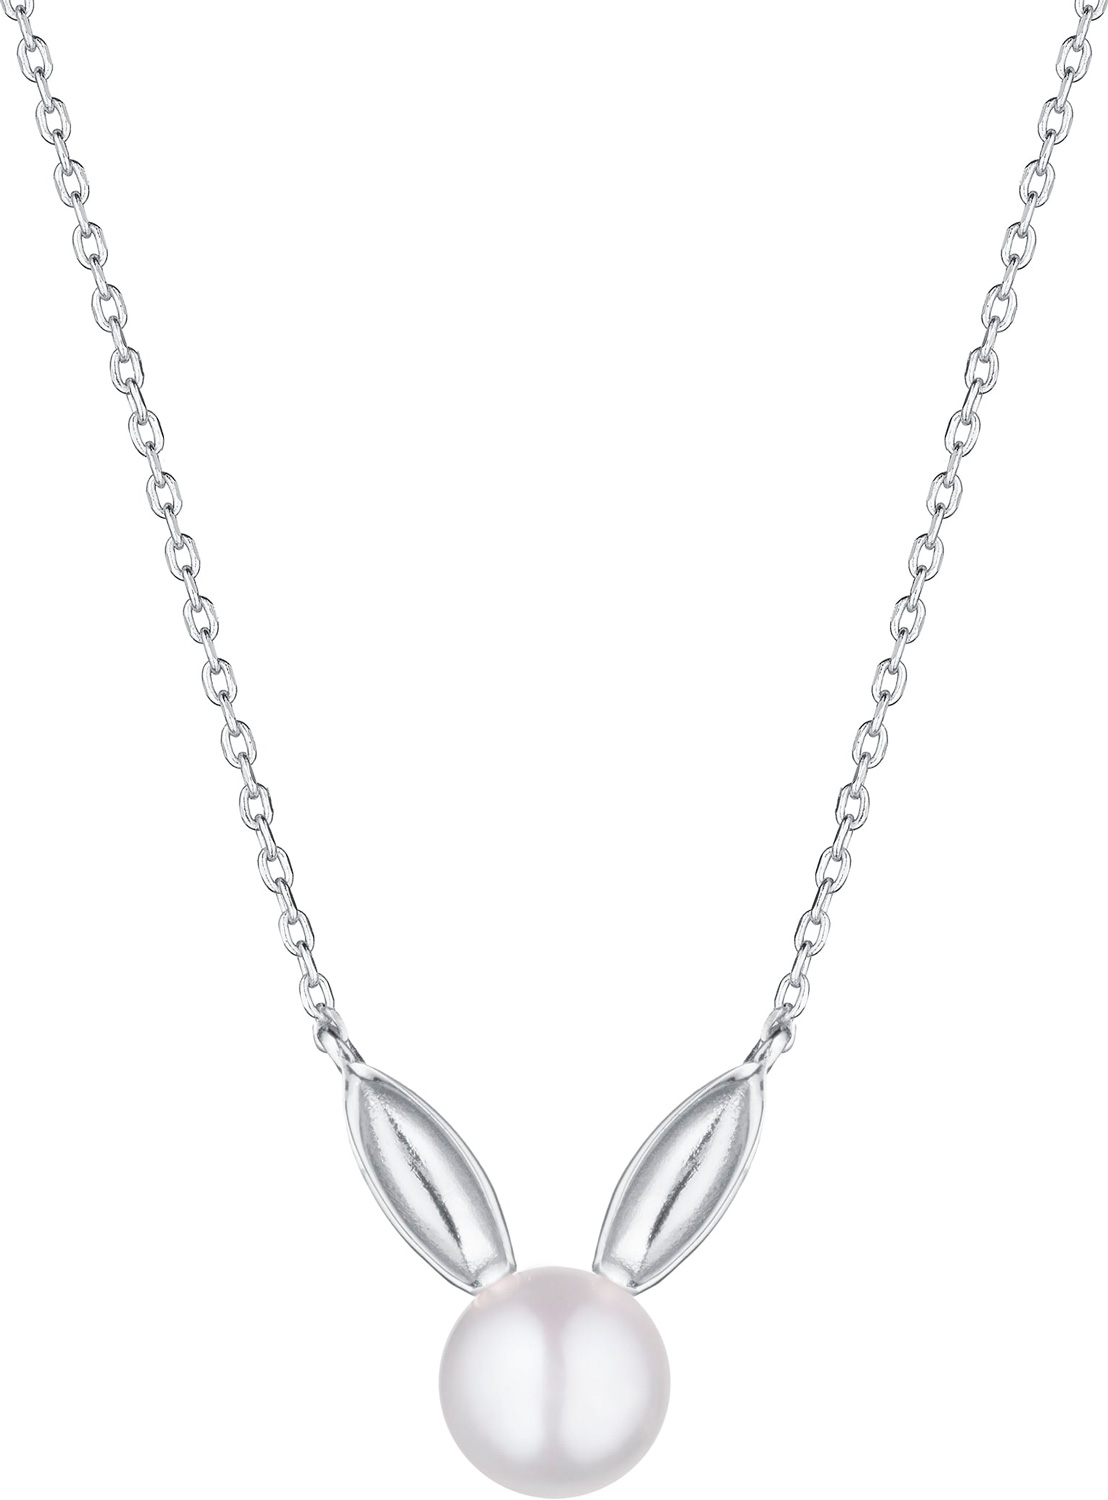     '''' Yana  Jewellery 222/04W-pearl-rabbit   